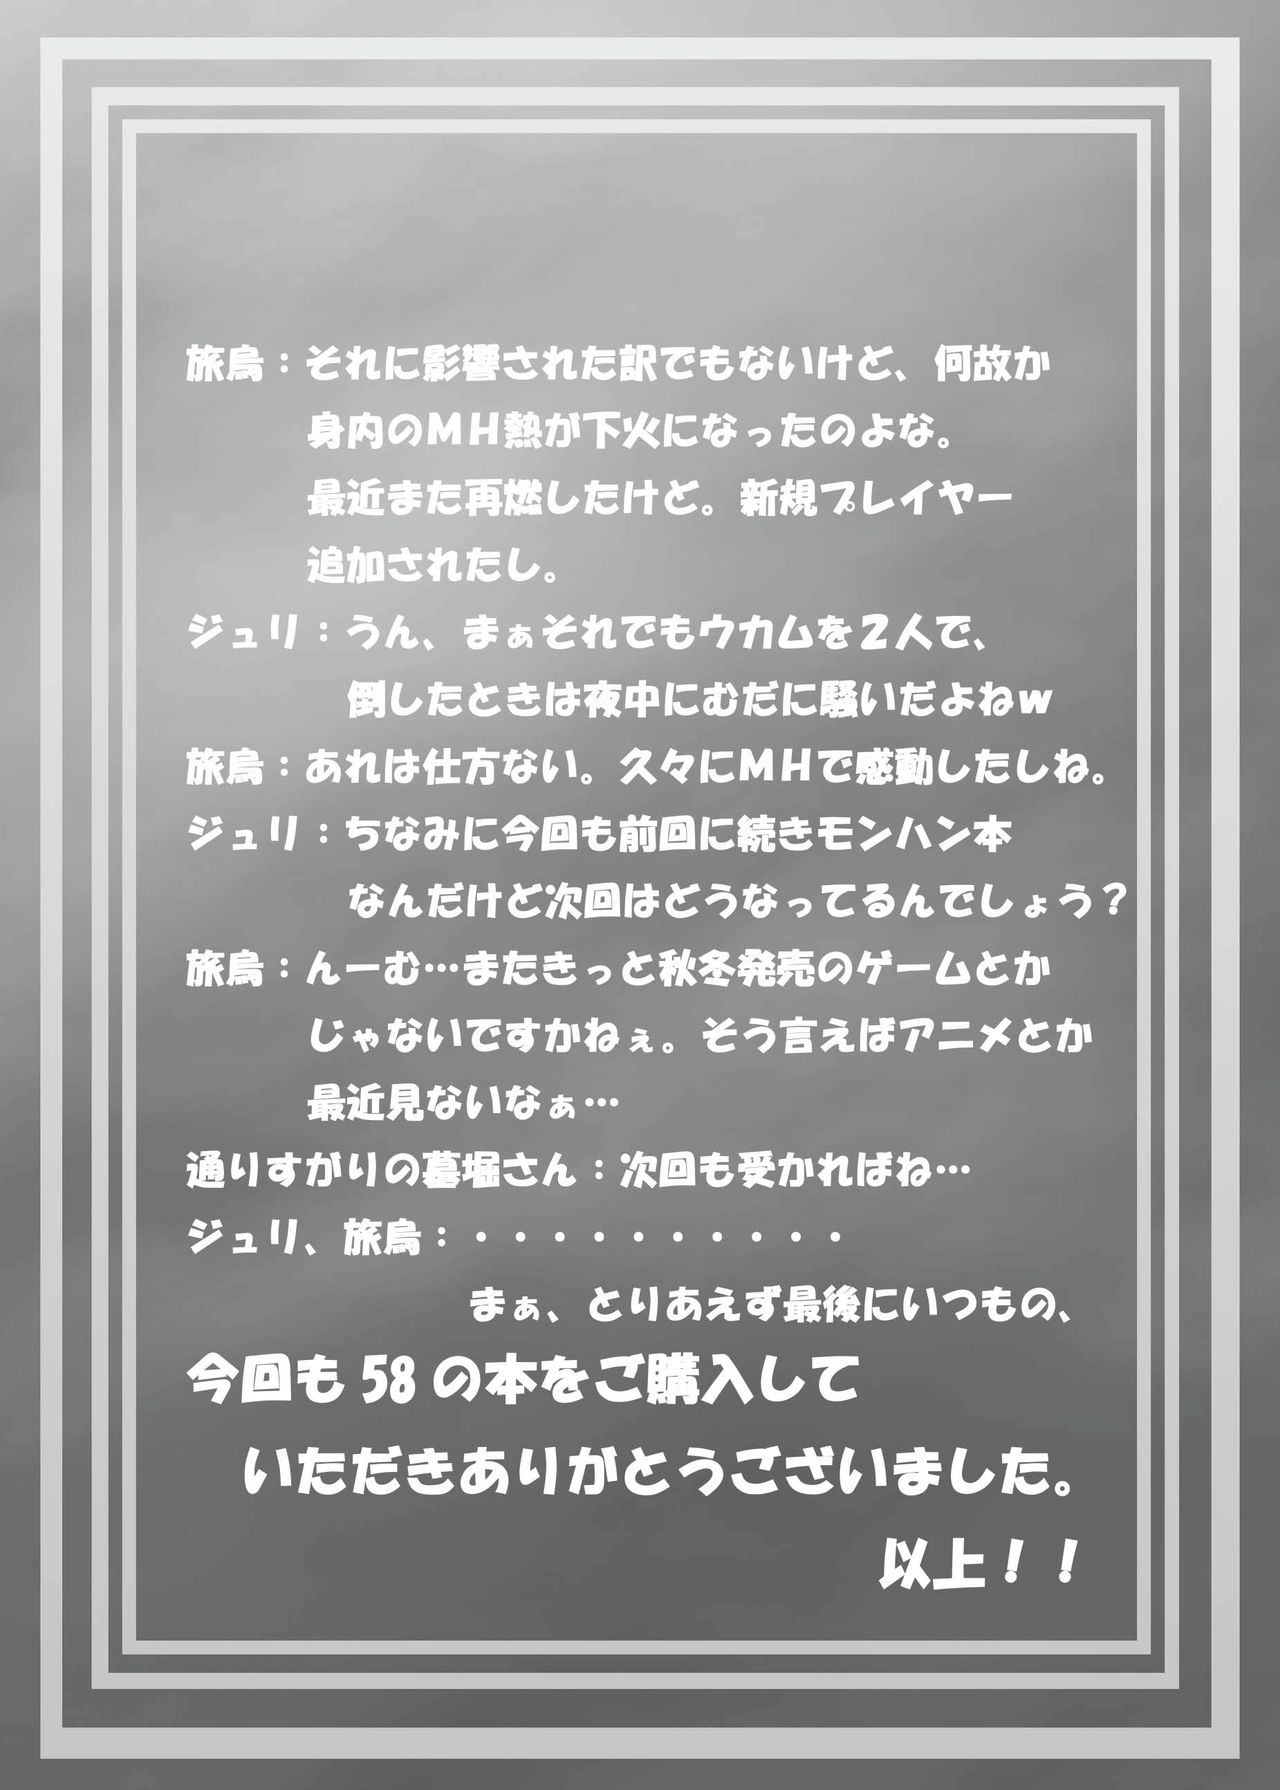 [Mahjong Yugen Co. Ltd 58 (Tabigarasu)] Boku no Otomo wa Hatarakanai! (Monster Hunter) [Digital] [麻雀有限会社58 (旅烏)] 僕のオトモは働かない! (モンスターハンター) [DL版]